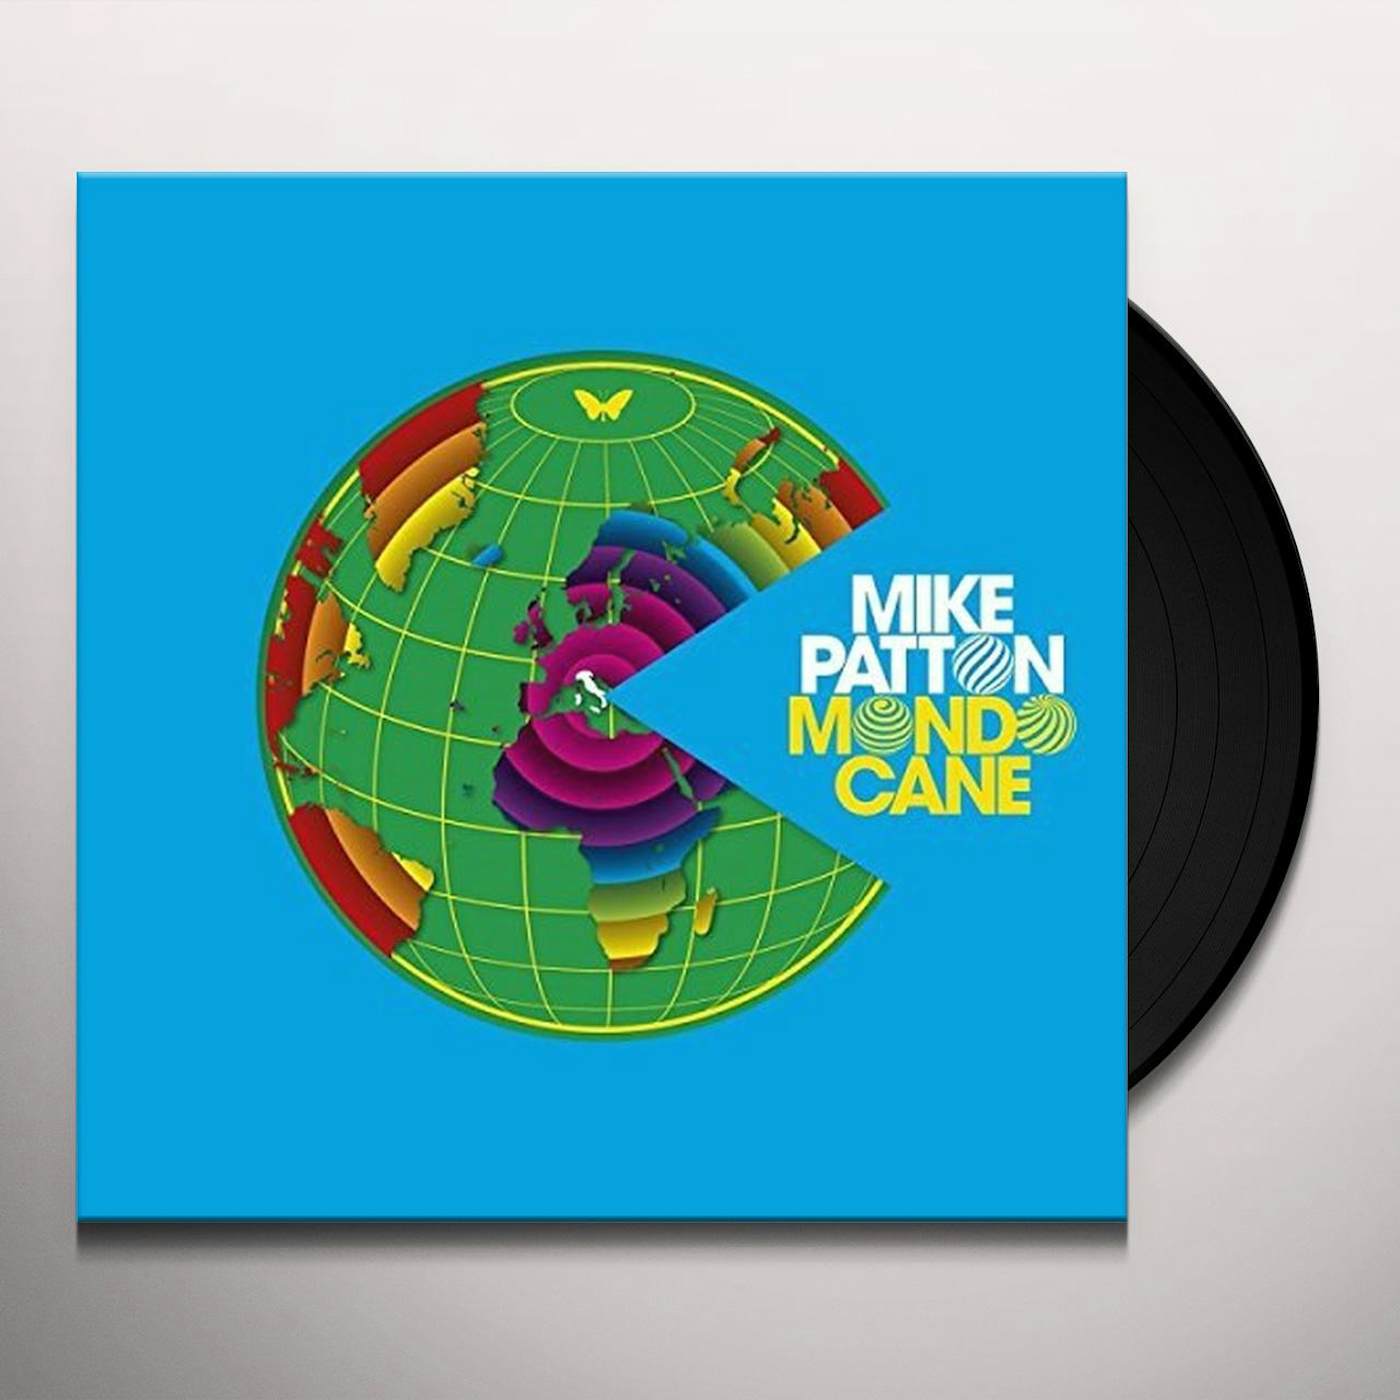 Mike Patton Mondo Cane Vinyl Record